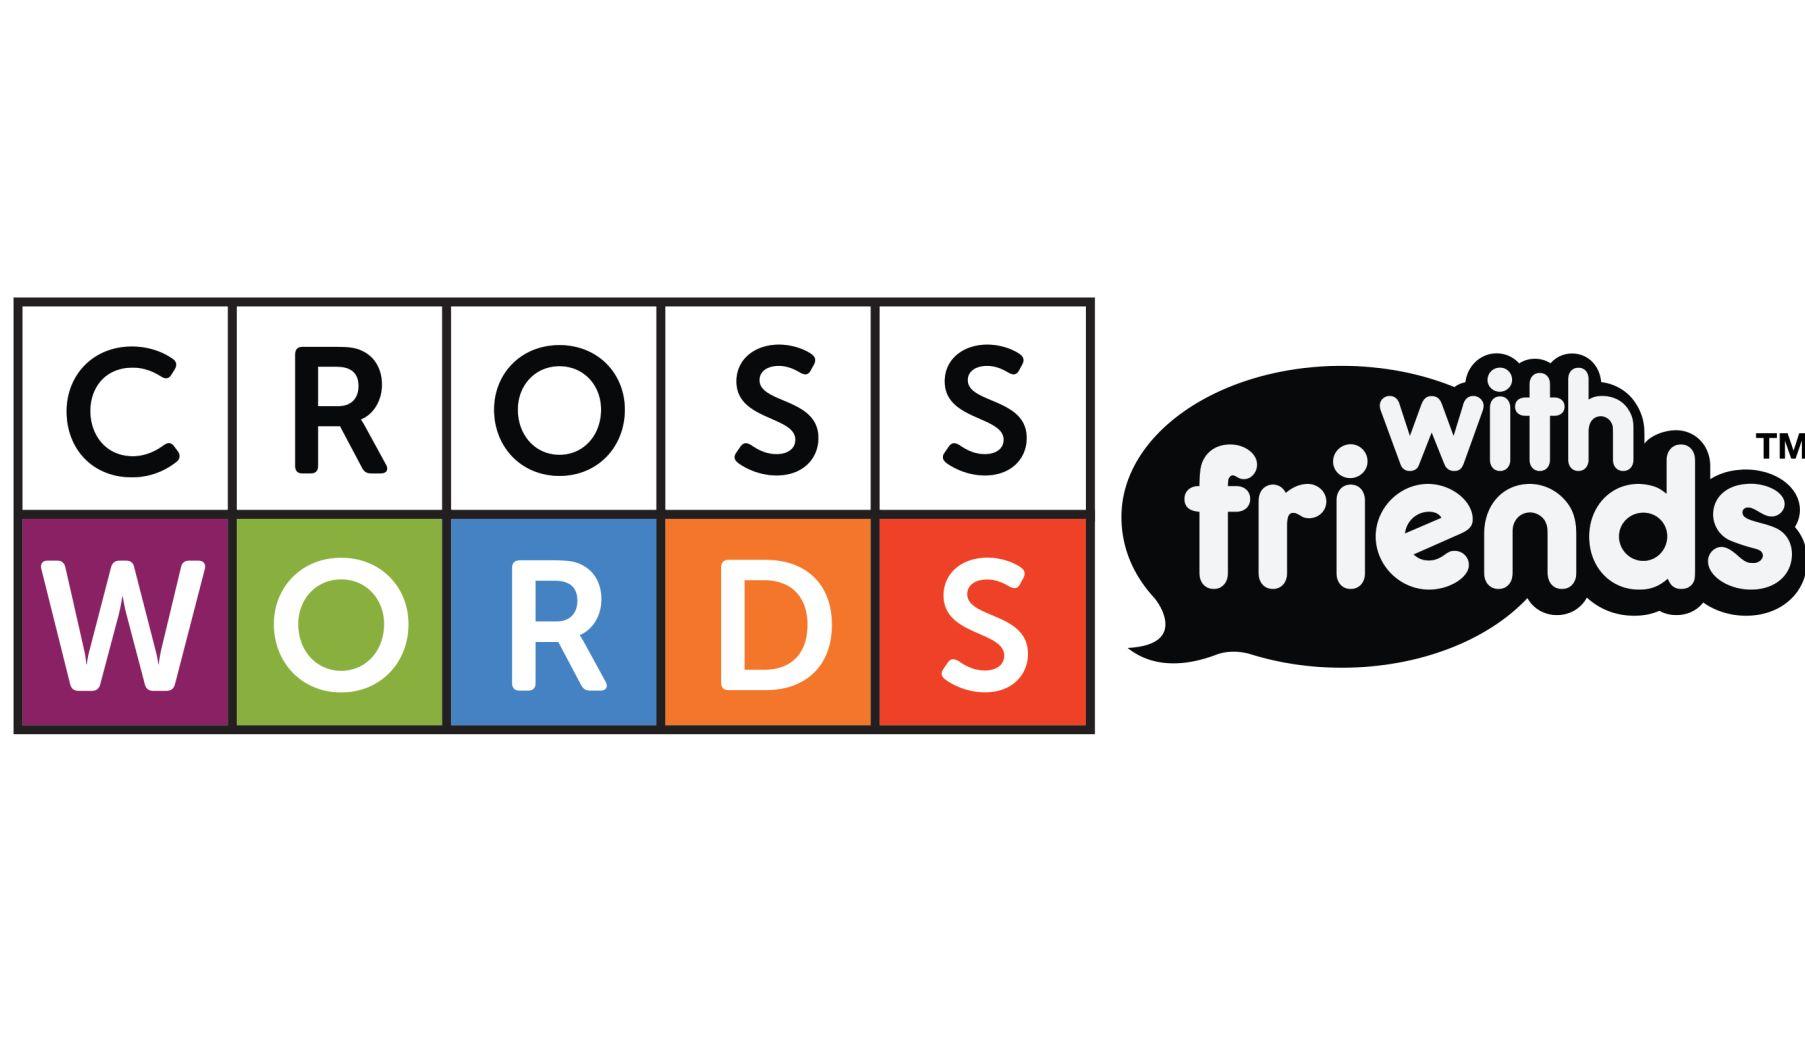 crosswords-with-friends.jpg